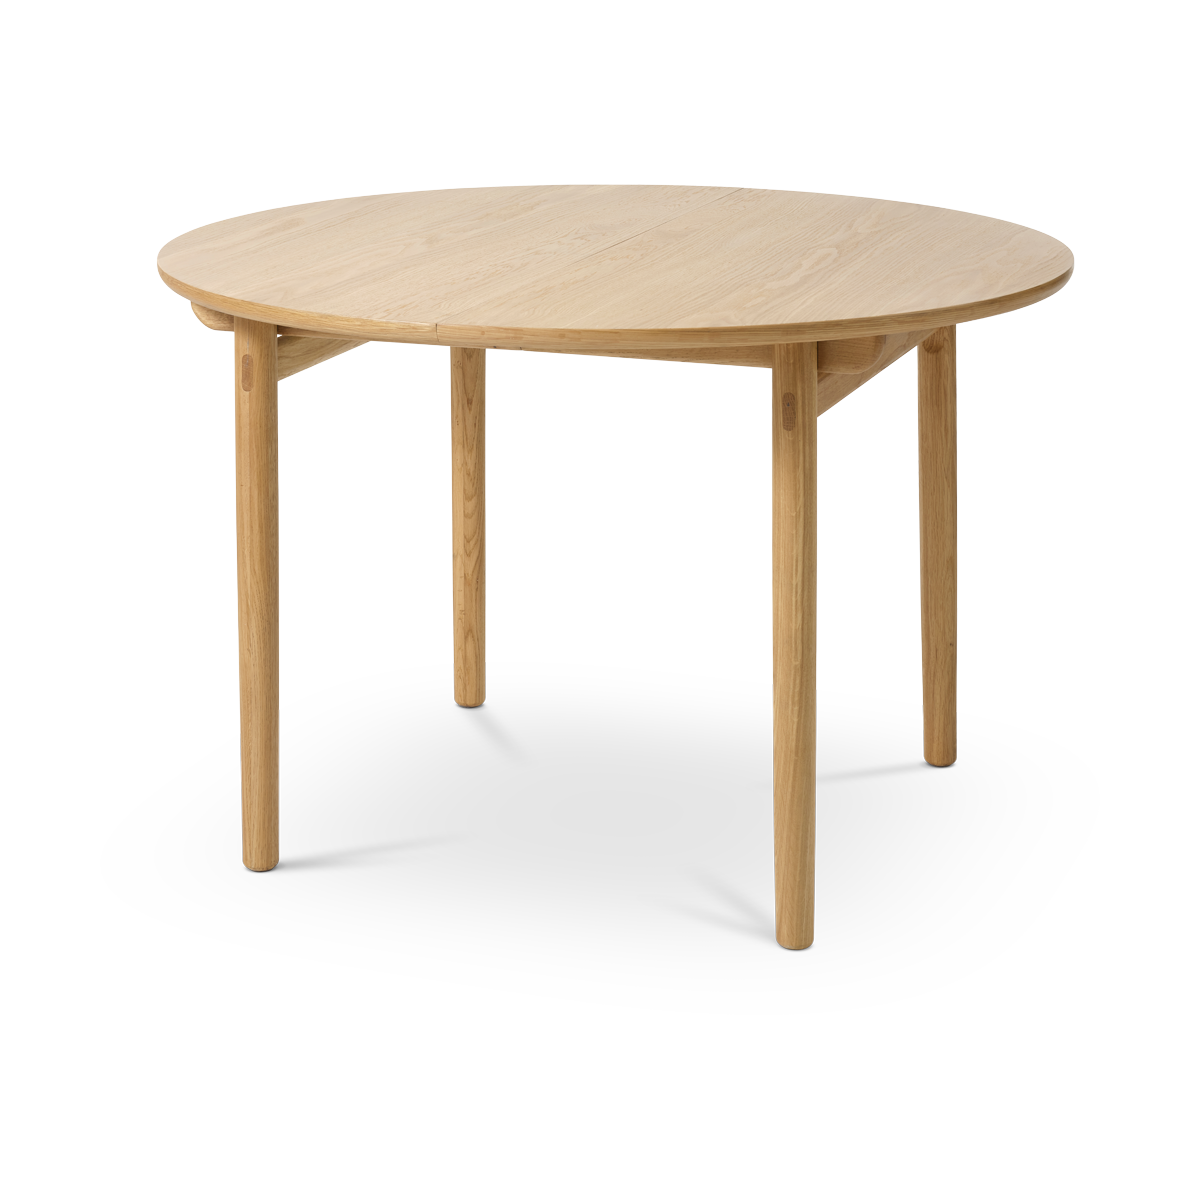 Kjeld verlengbare houten eettafel naturel - Ø120 cm